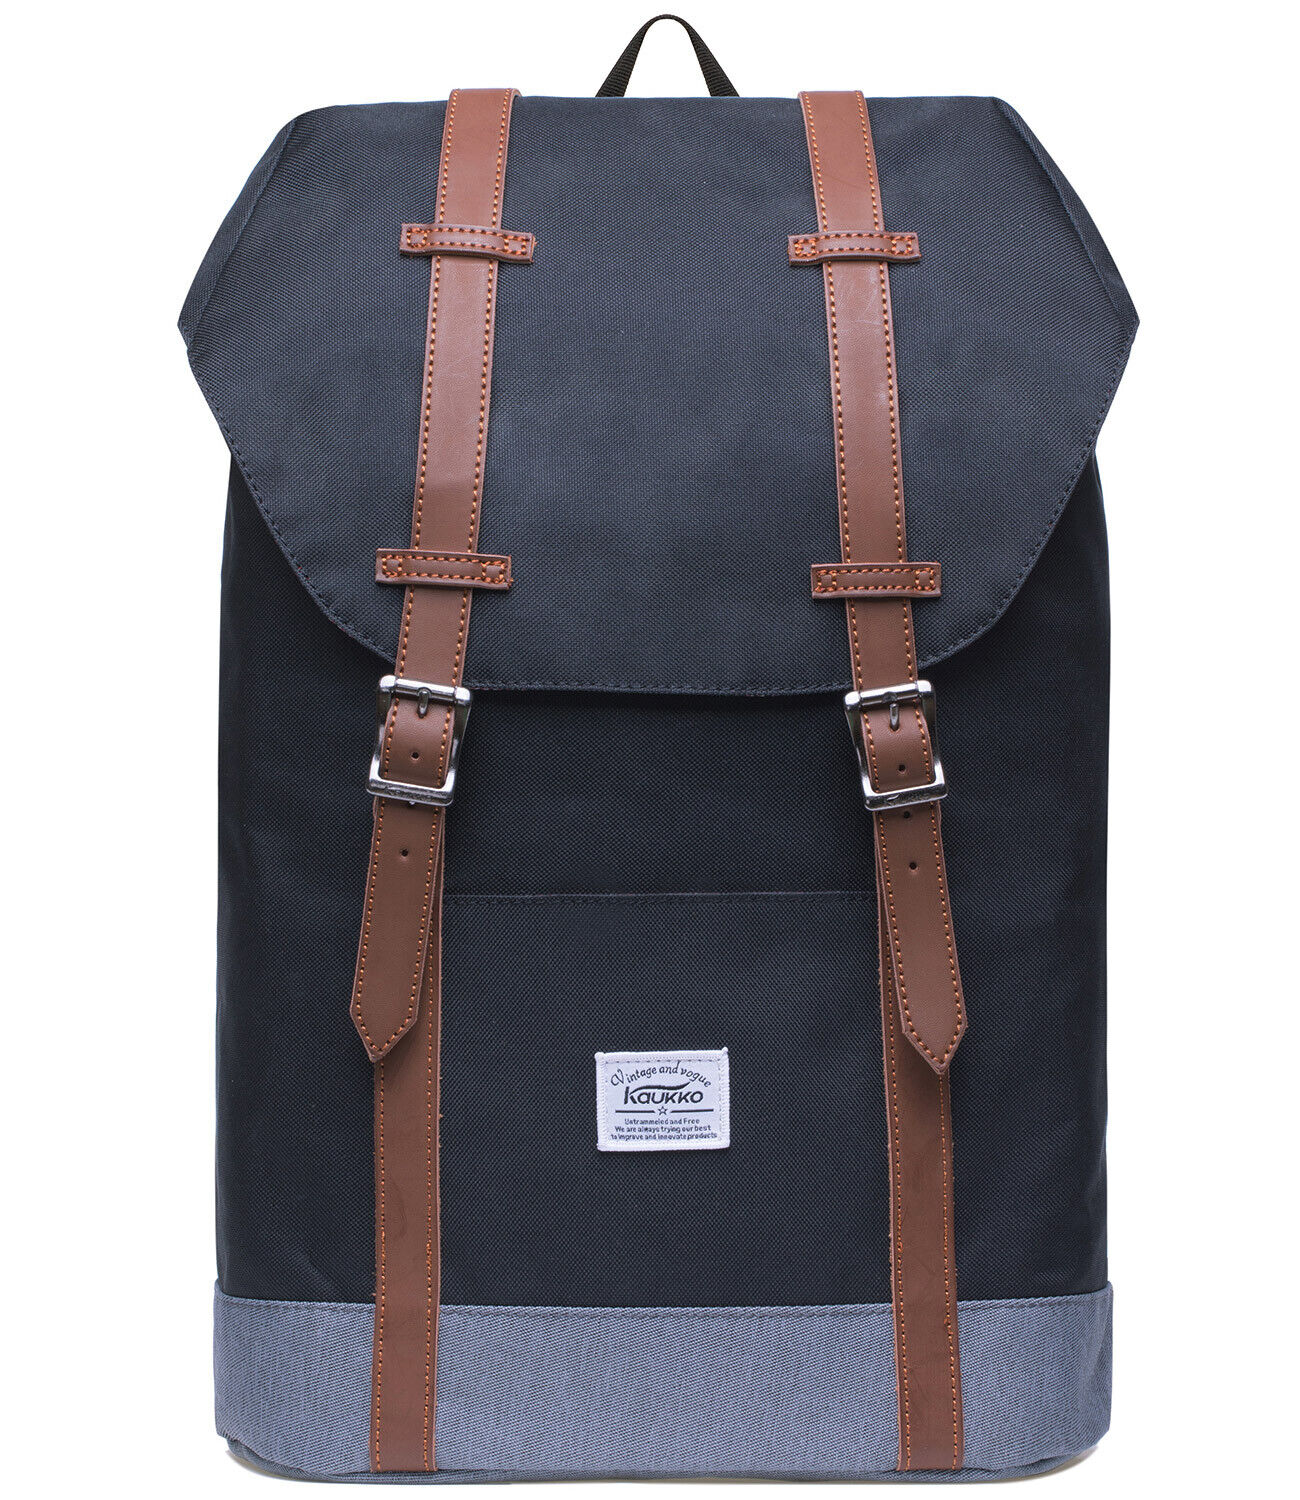 KAUKKO Business Bag Notebook Laptop Backpack School Bag Camping Hiking Traveling